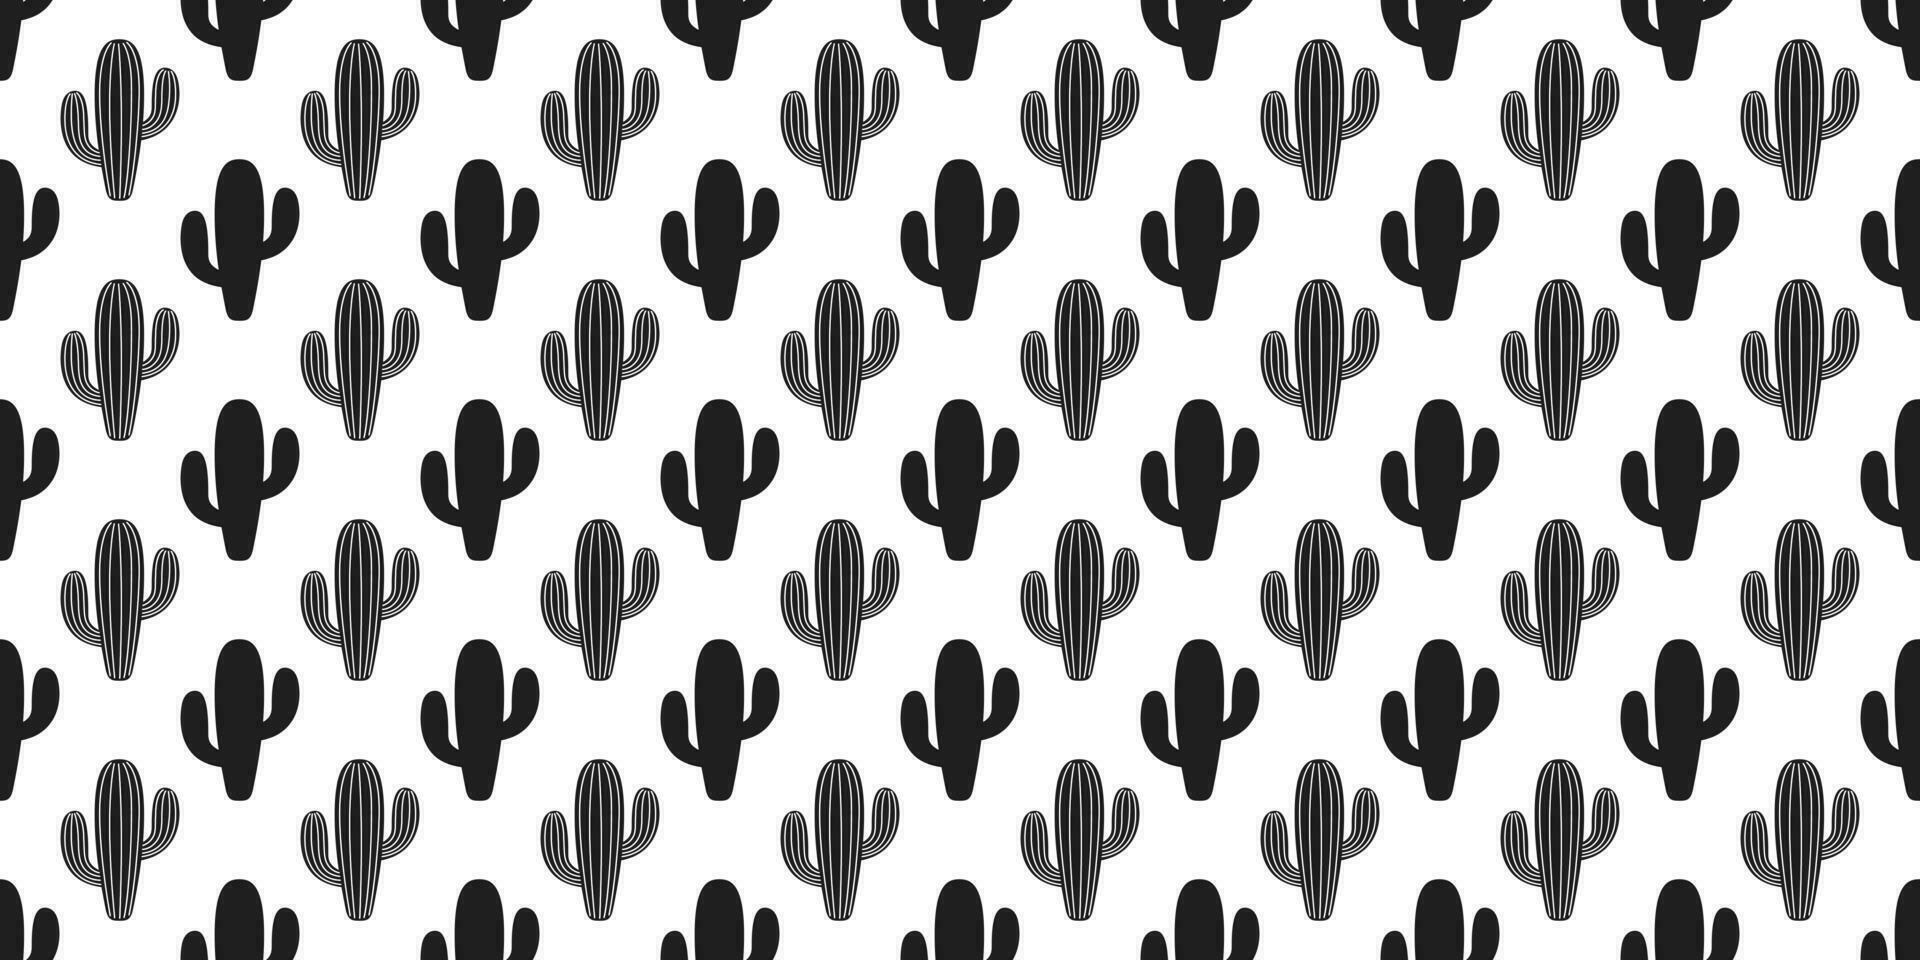 cactus seamless pattern vector flower Desert botanica plant garden scarf cartoon isolated tile background repeat wallpaper